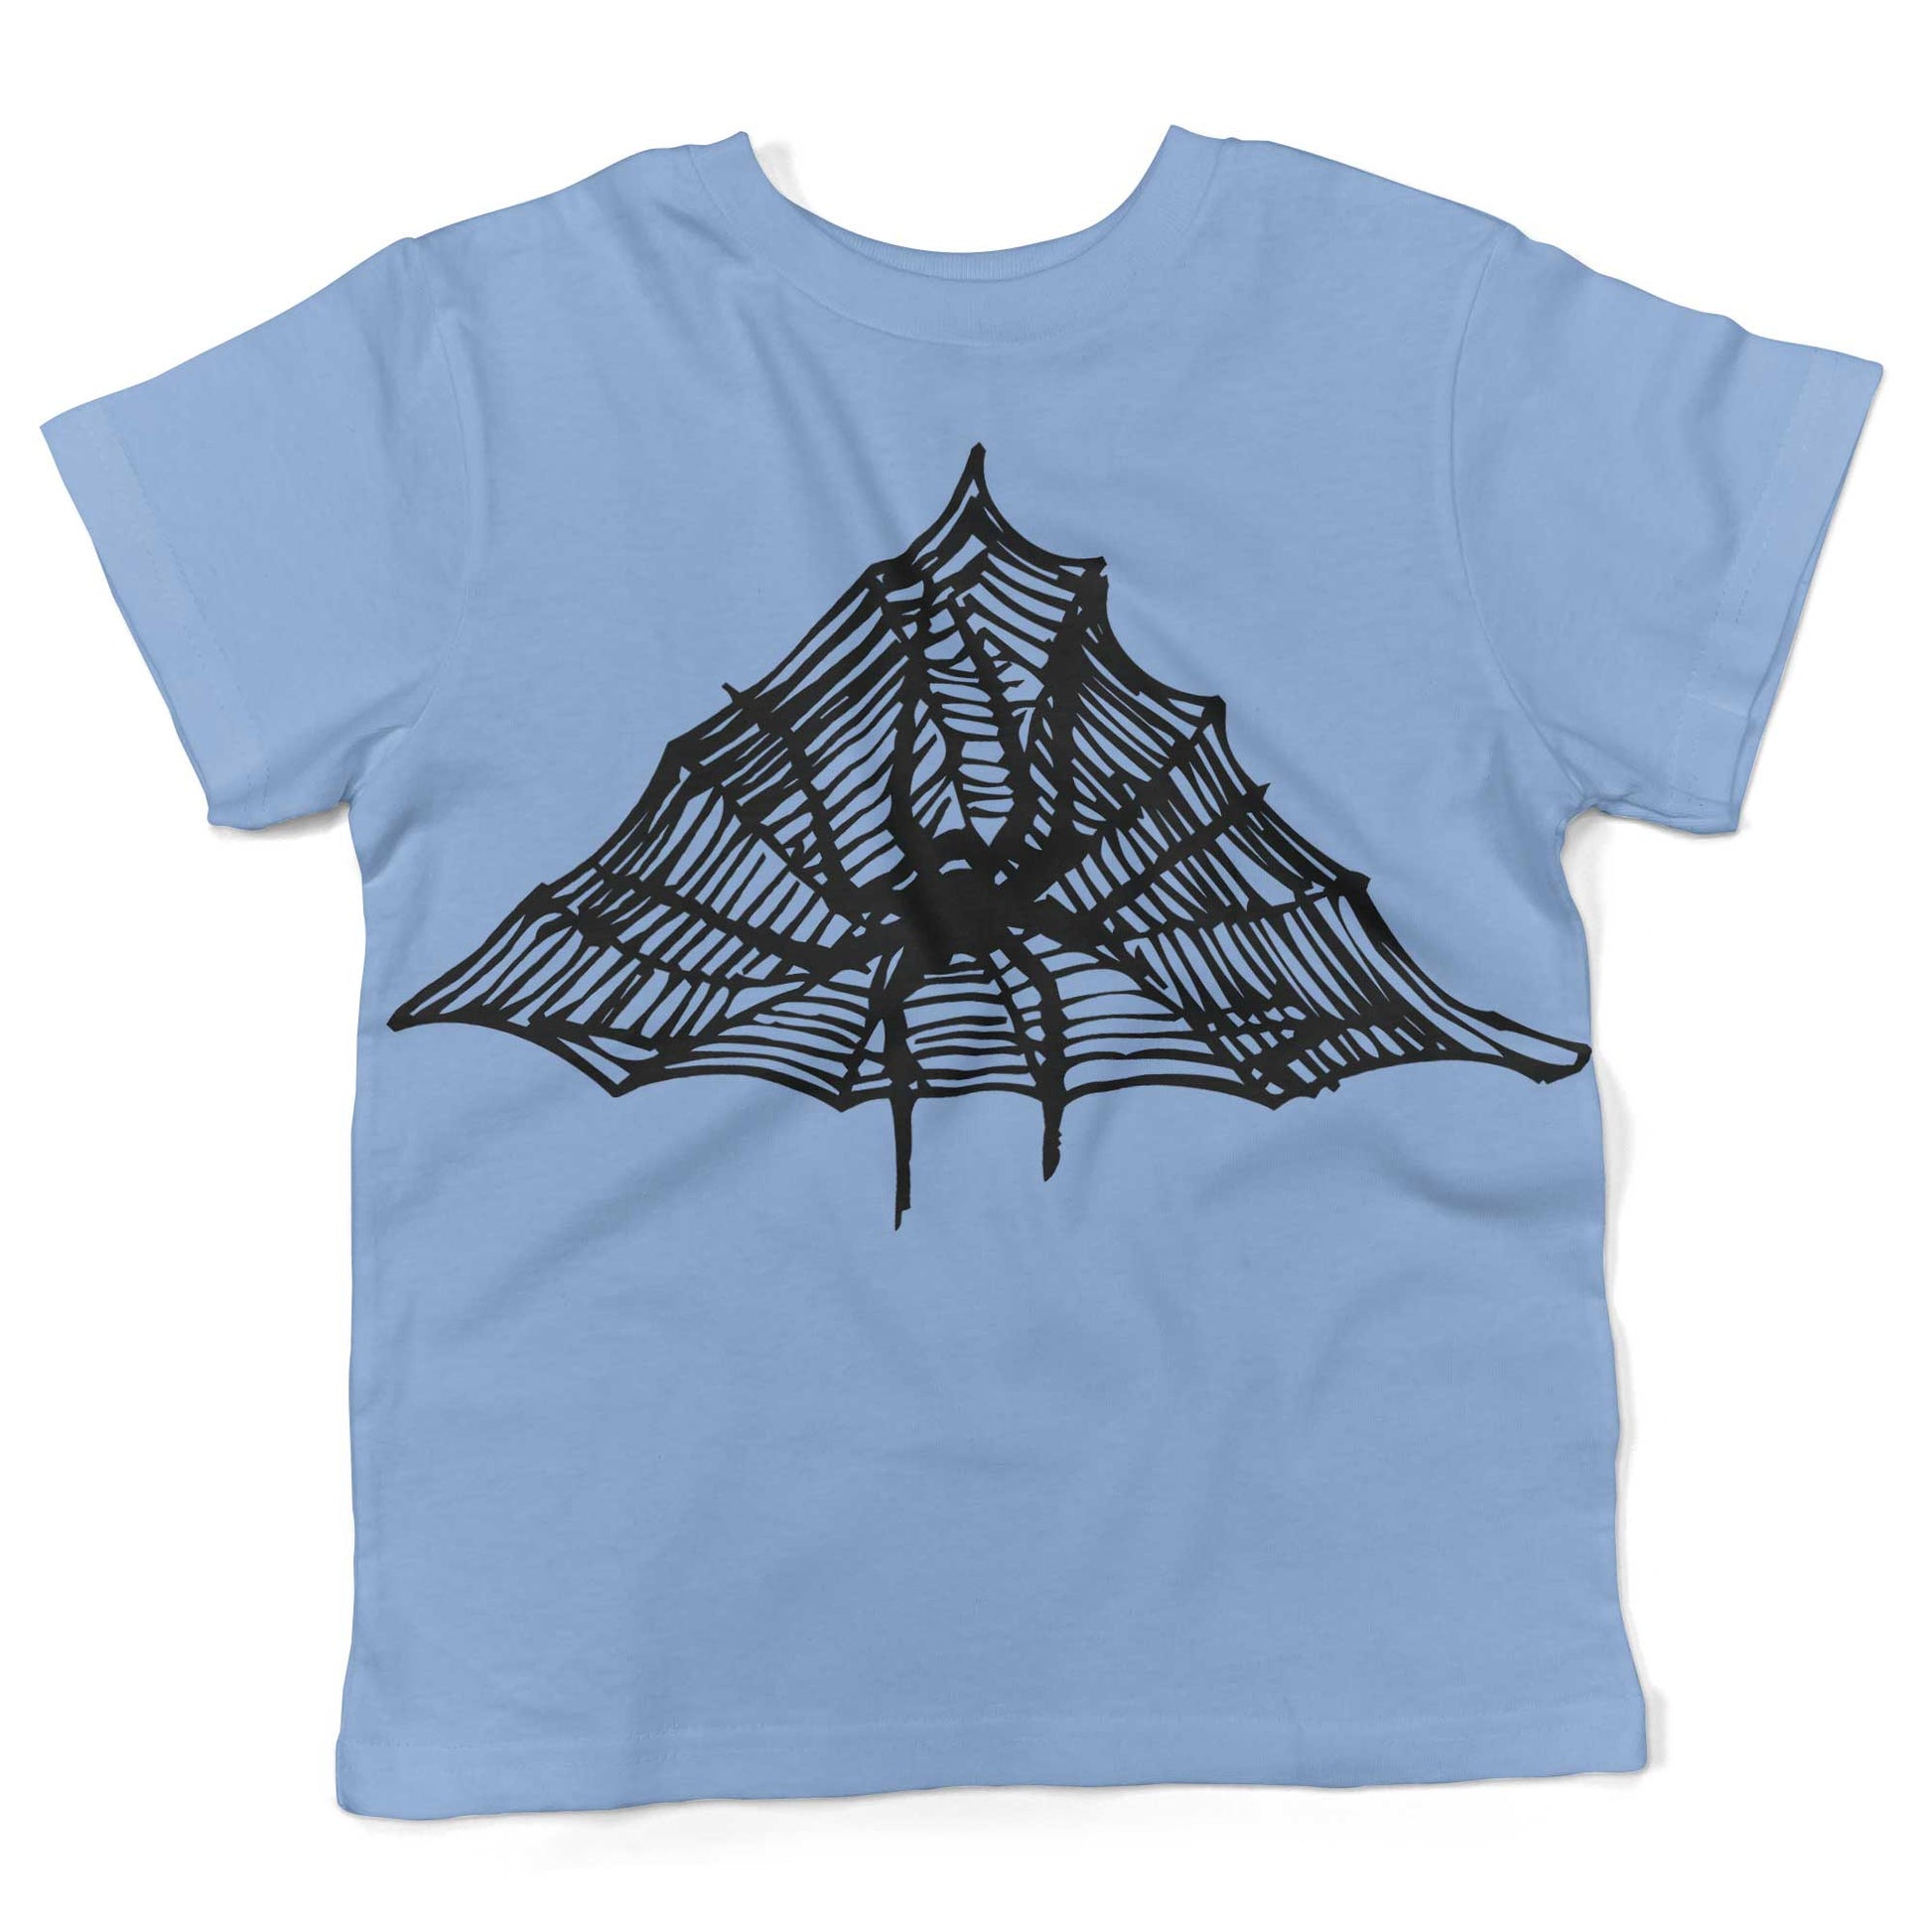 Spiderweb Toddler Shirt-Organic Baby Blue-2T